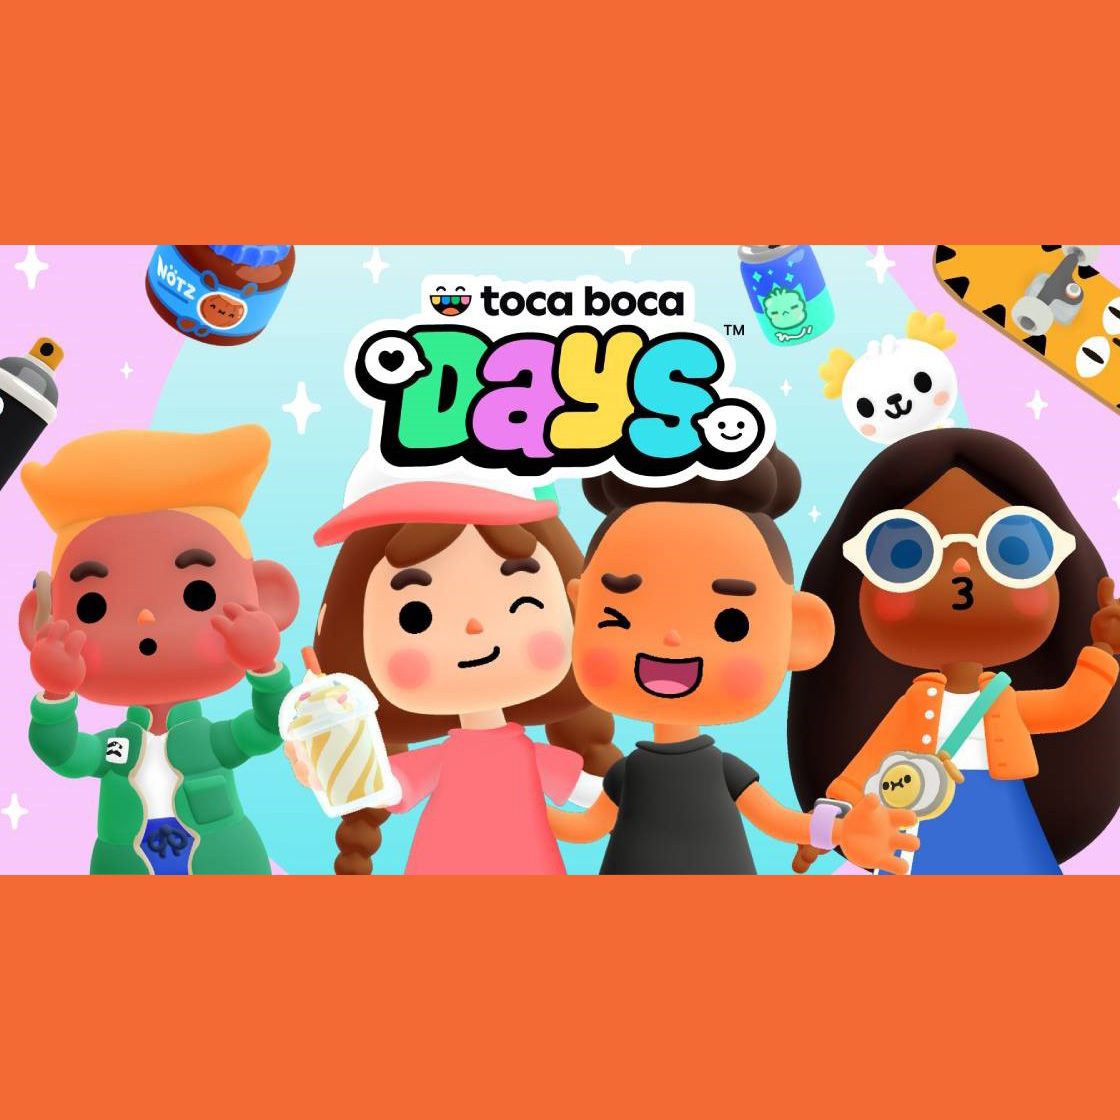 Toca Boca Launches Multiplayer Game: Toca Boca Days